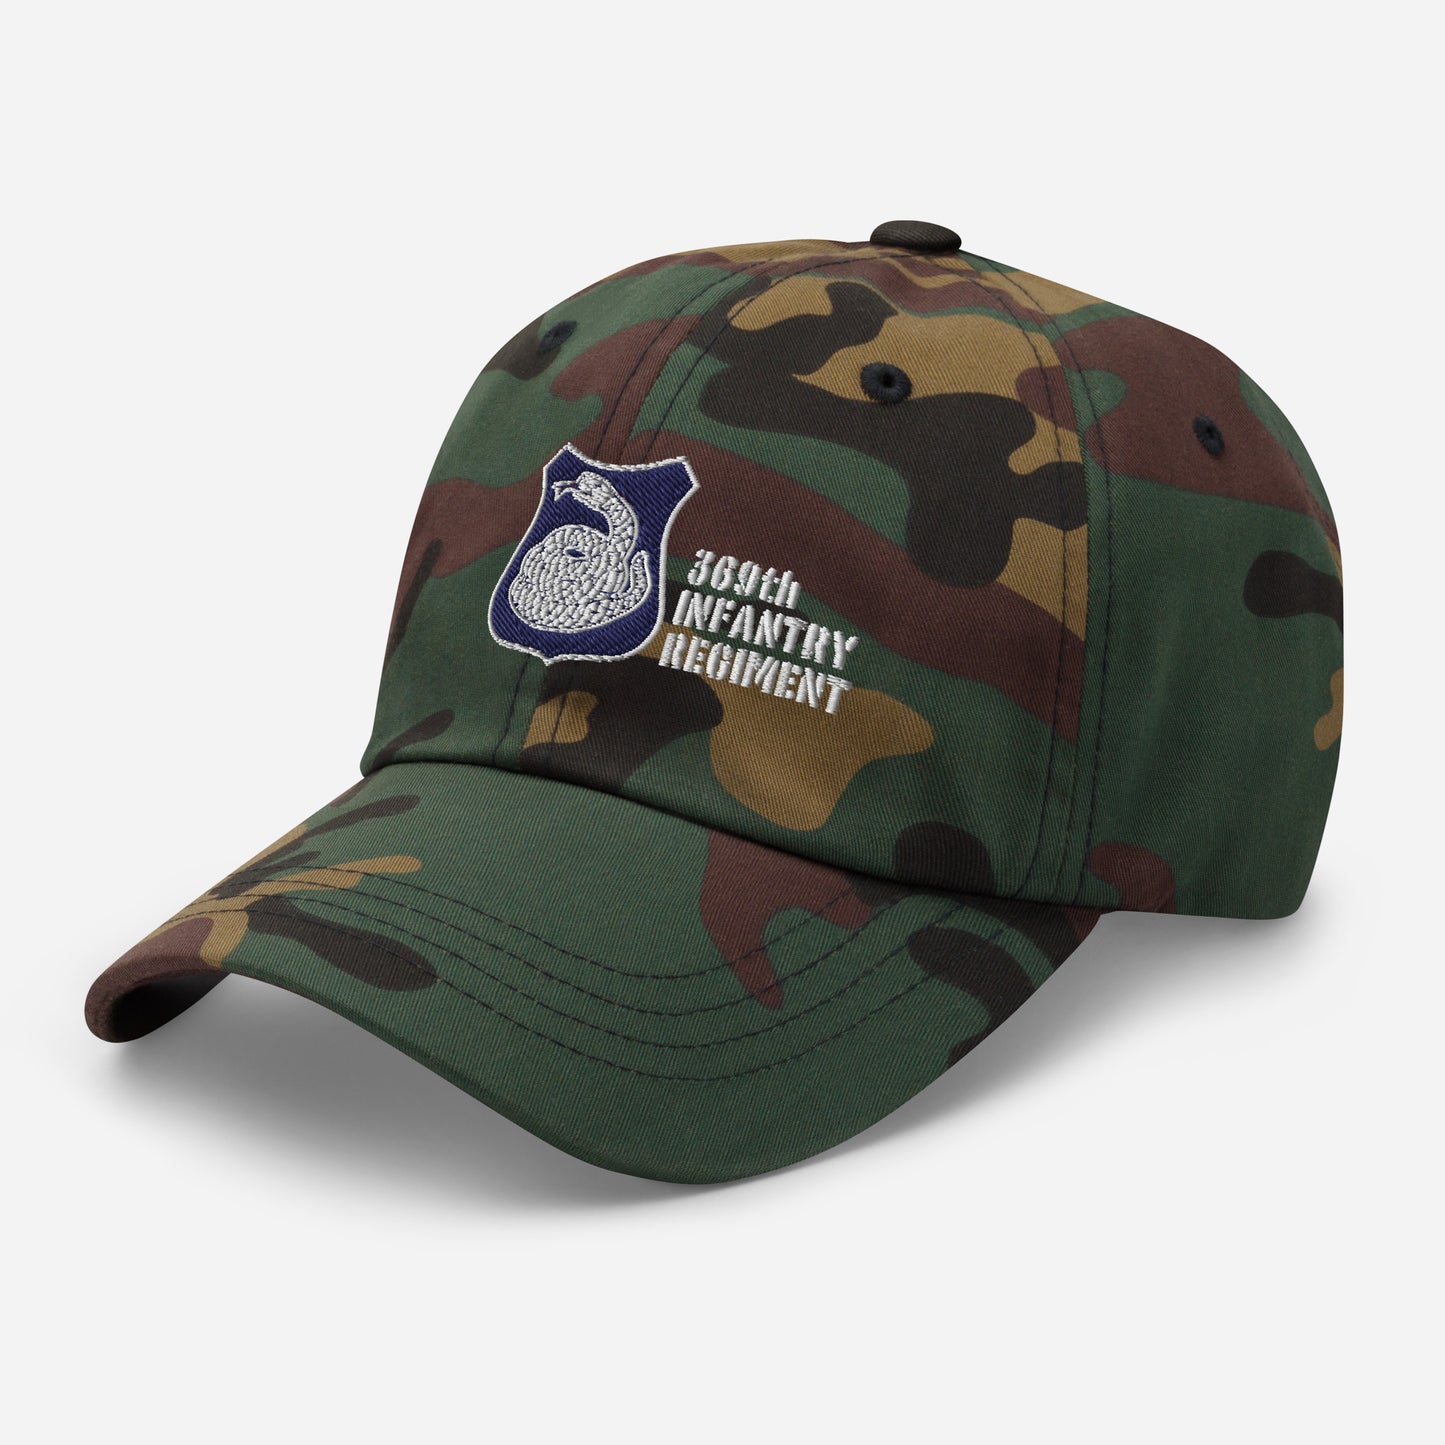 camouflage hat with harlem hellfighters rattlesnake emblem reading 369th infantry regiment 